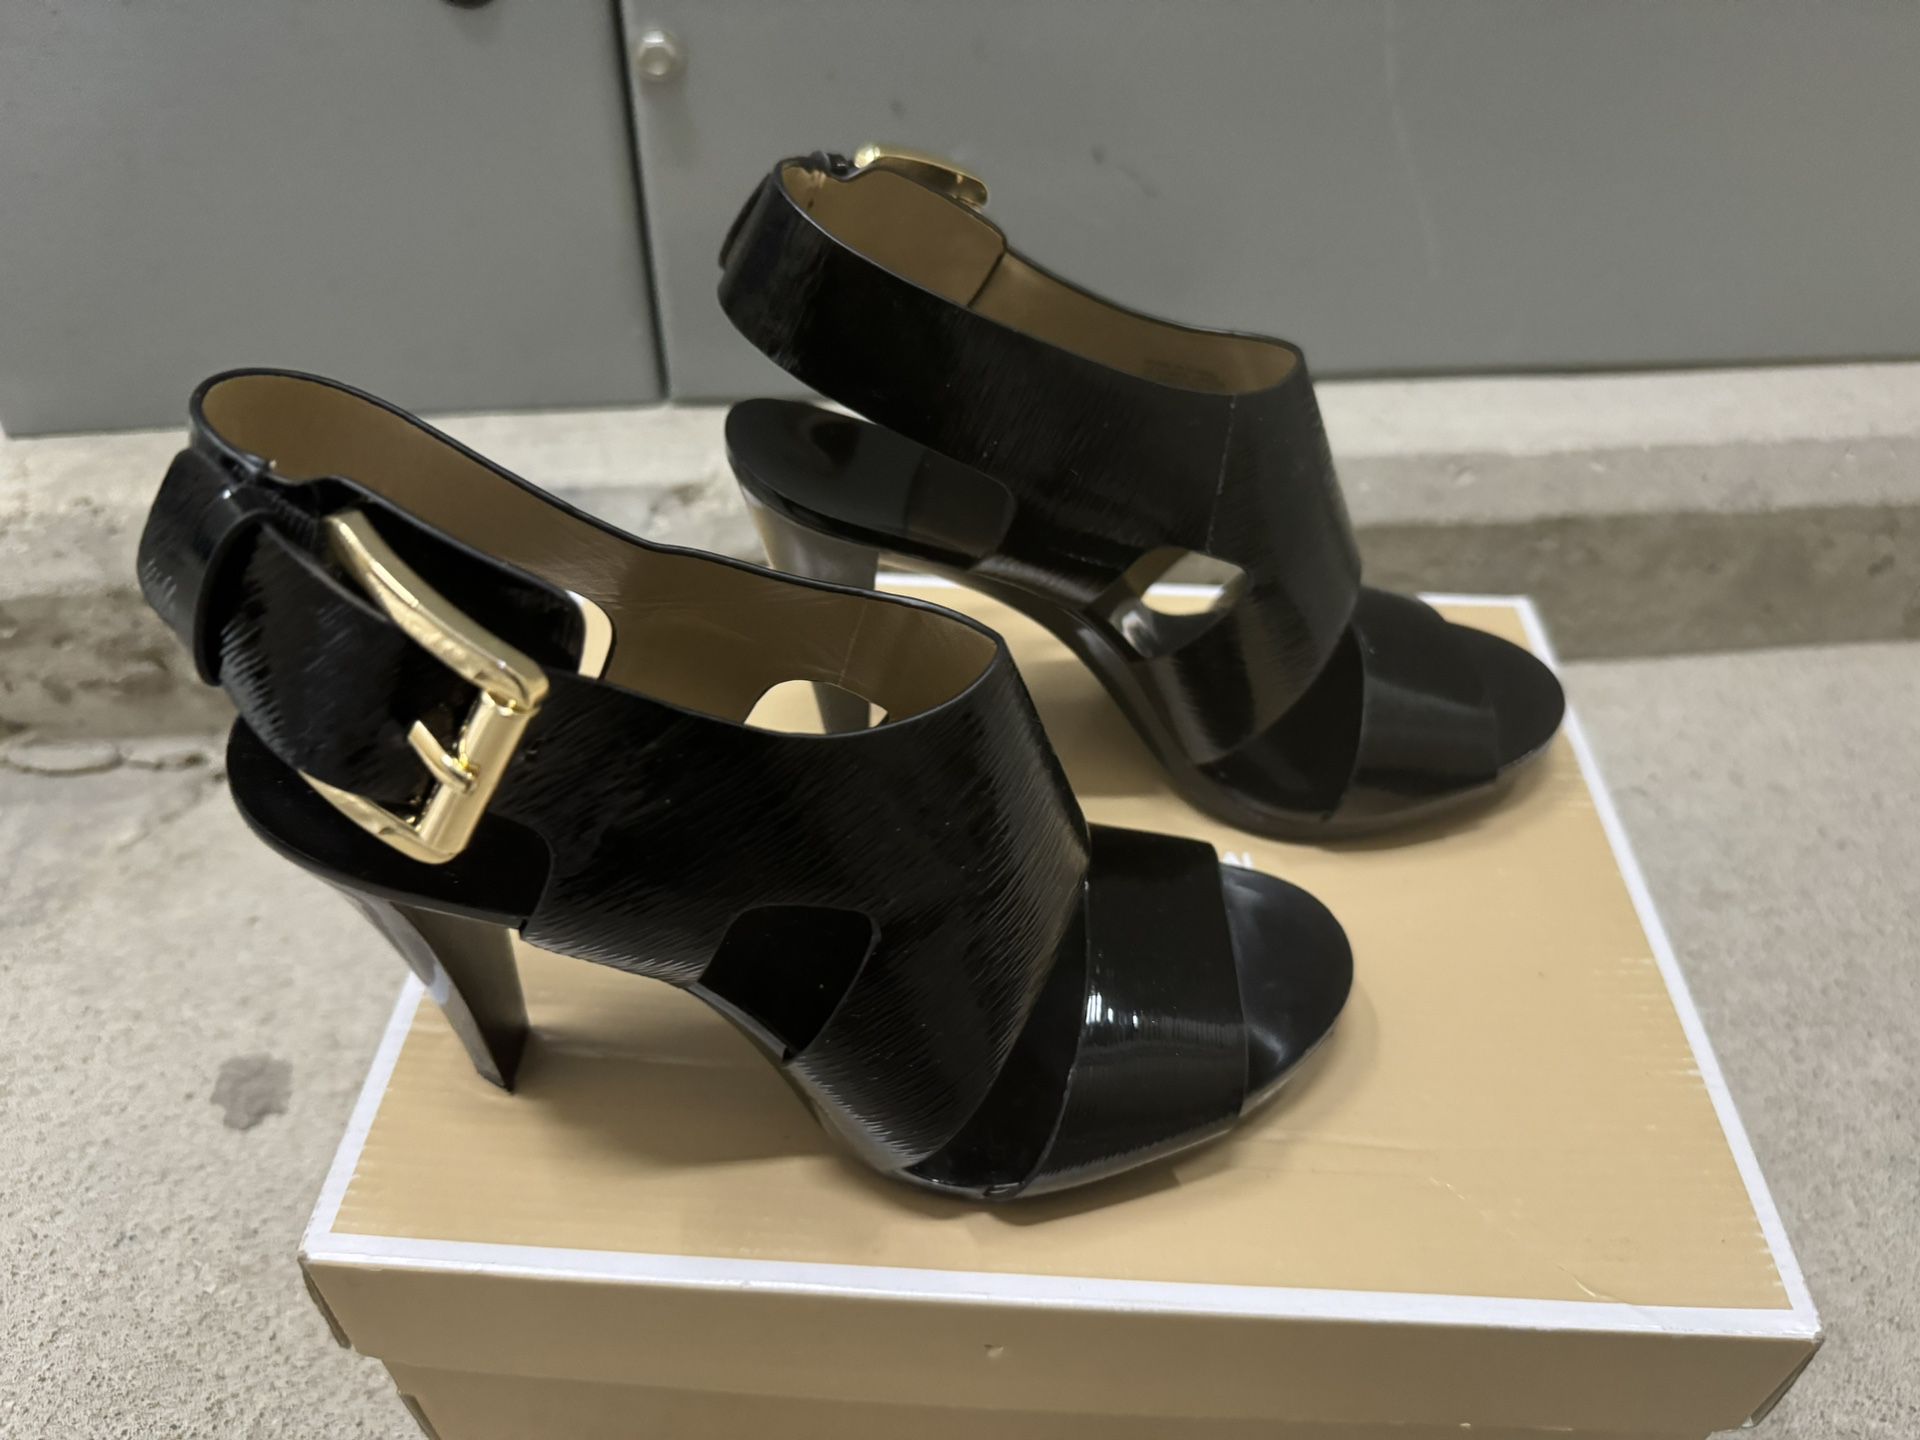 Michael Kors patent leather dress sandals 6.5M  